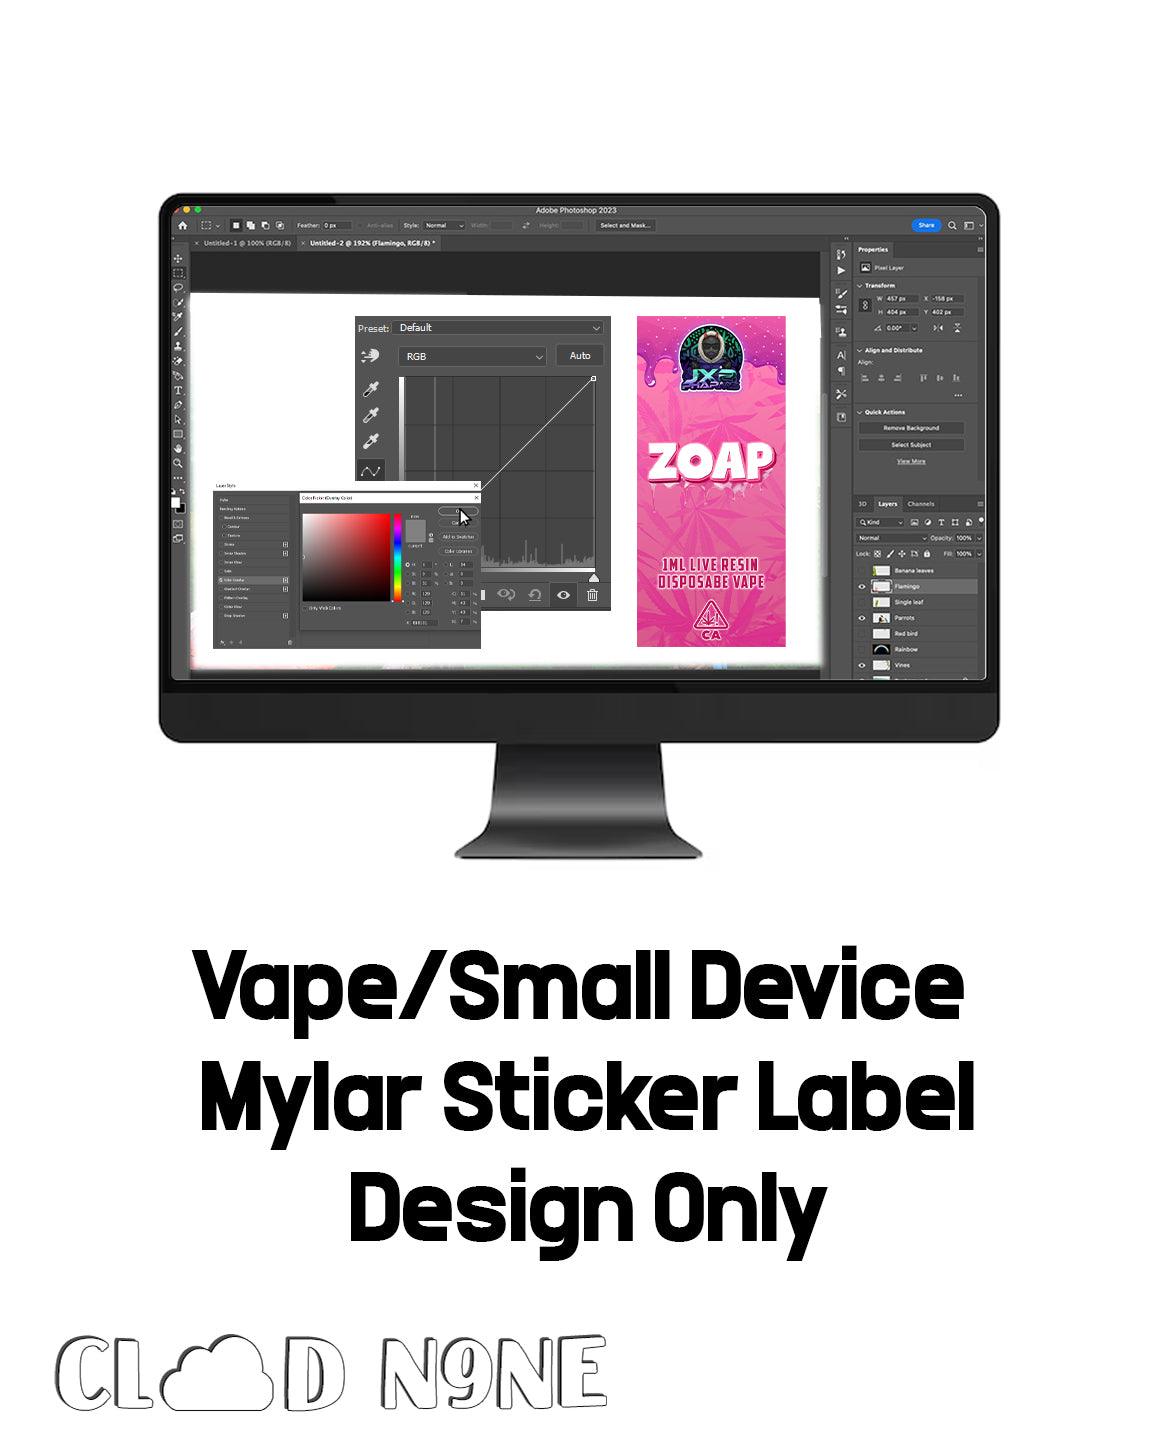 Vape/Small Device Sticker Label Bag Design - CloudNine